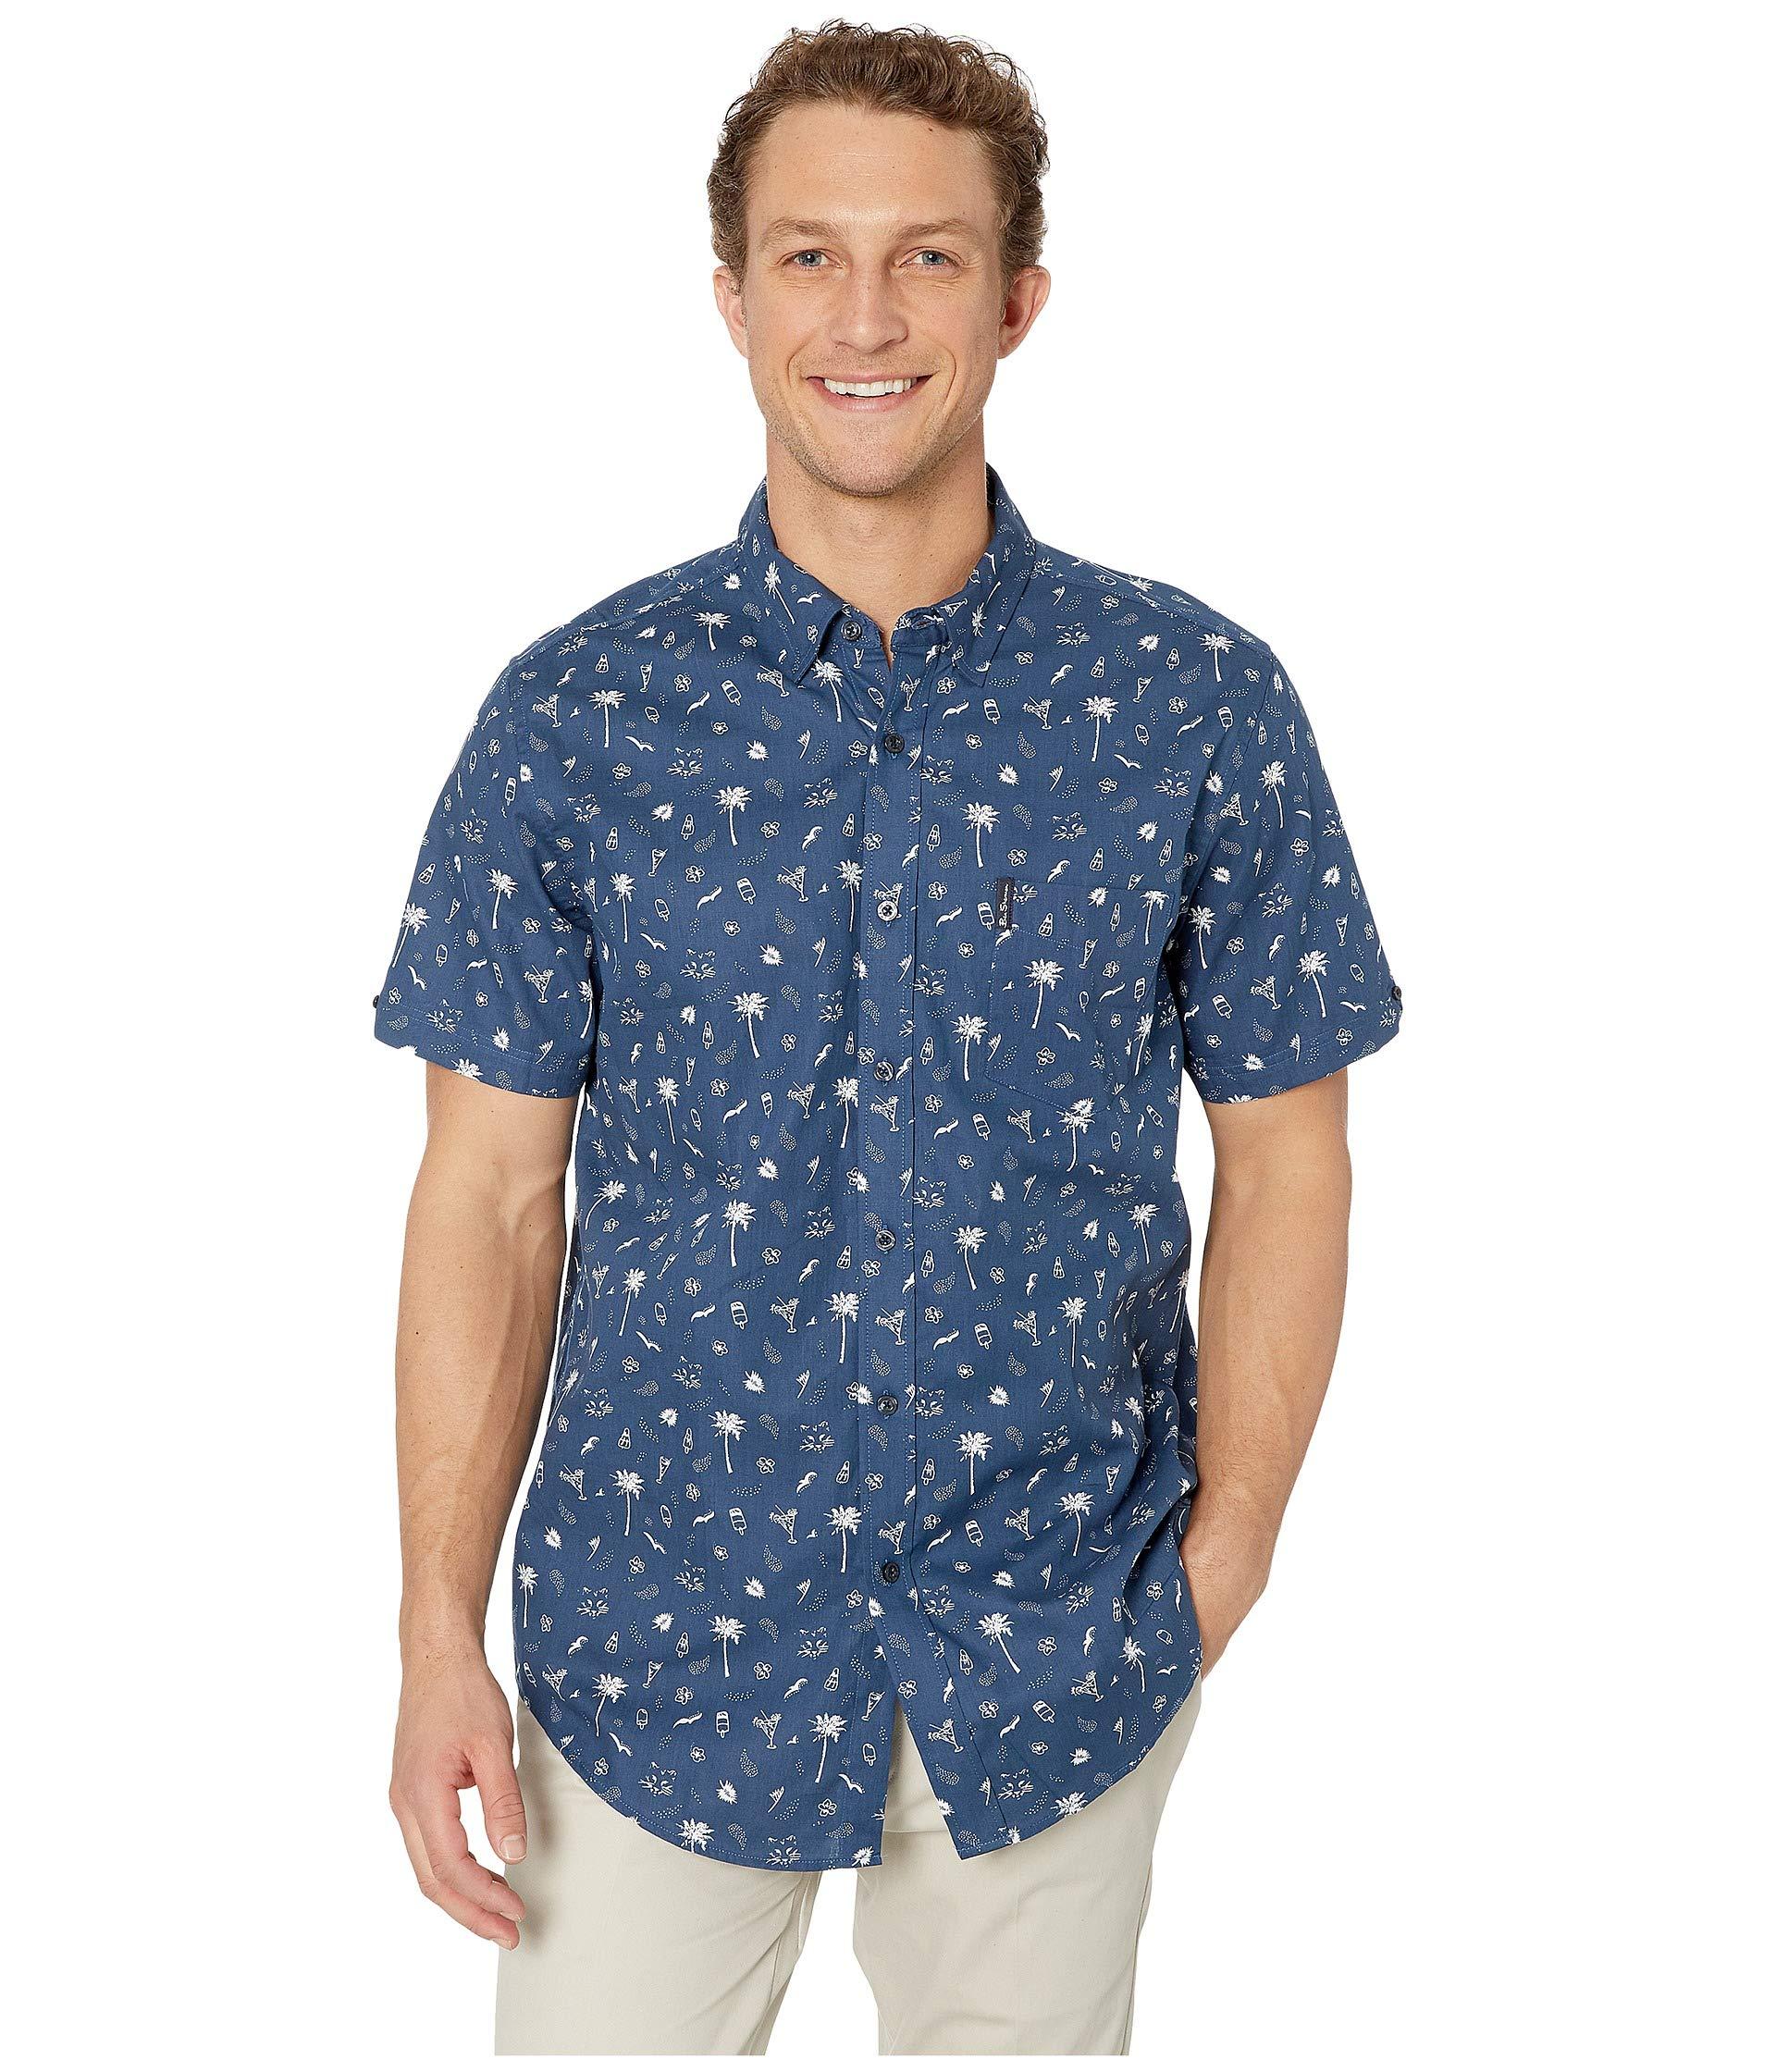 Lyst - Ben Sherman Short Sleeve Palms Print Shirt in Blue for Men